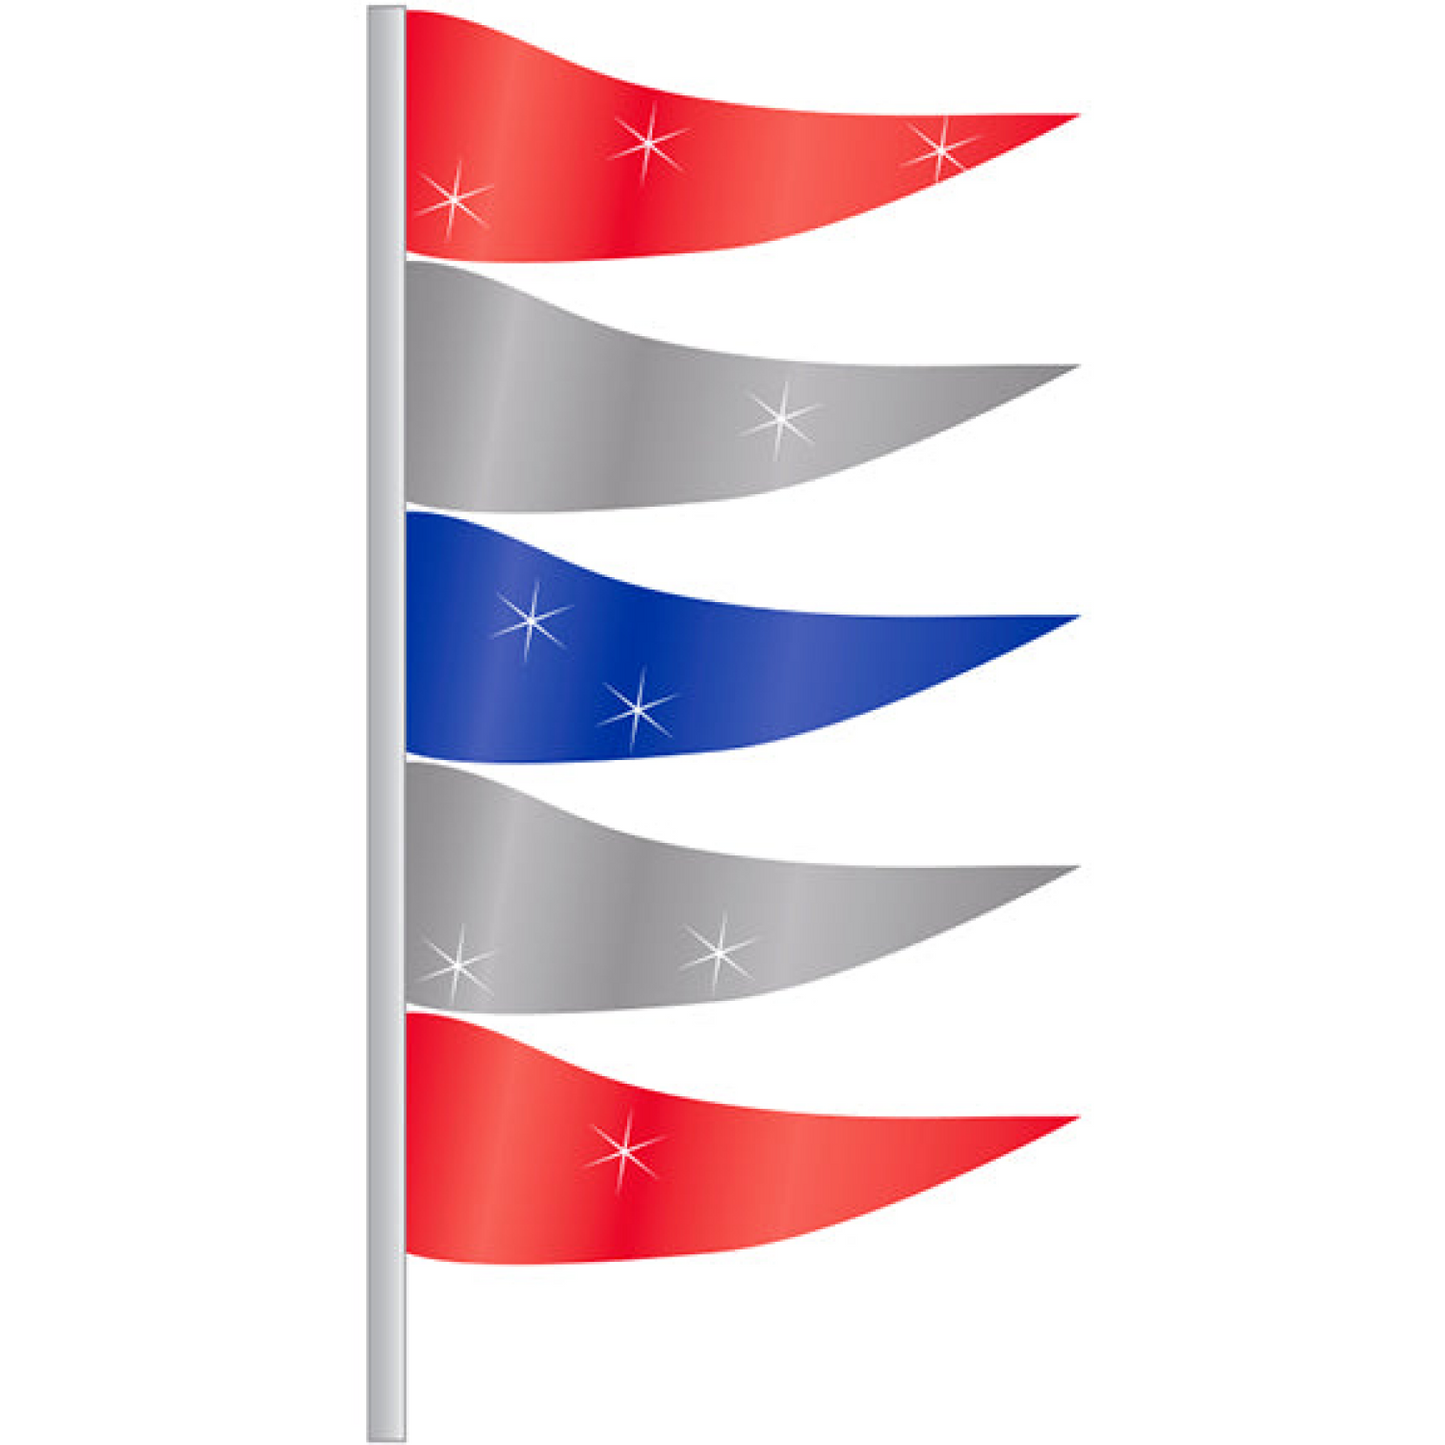 Antenna Flag - Metallic Triangular Flags- Red, Silver & Blue